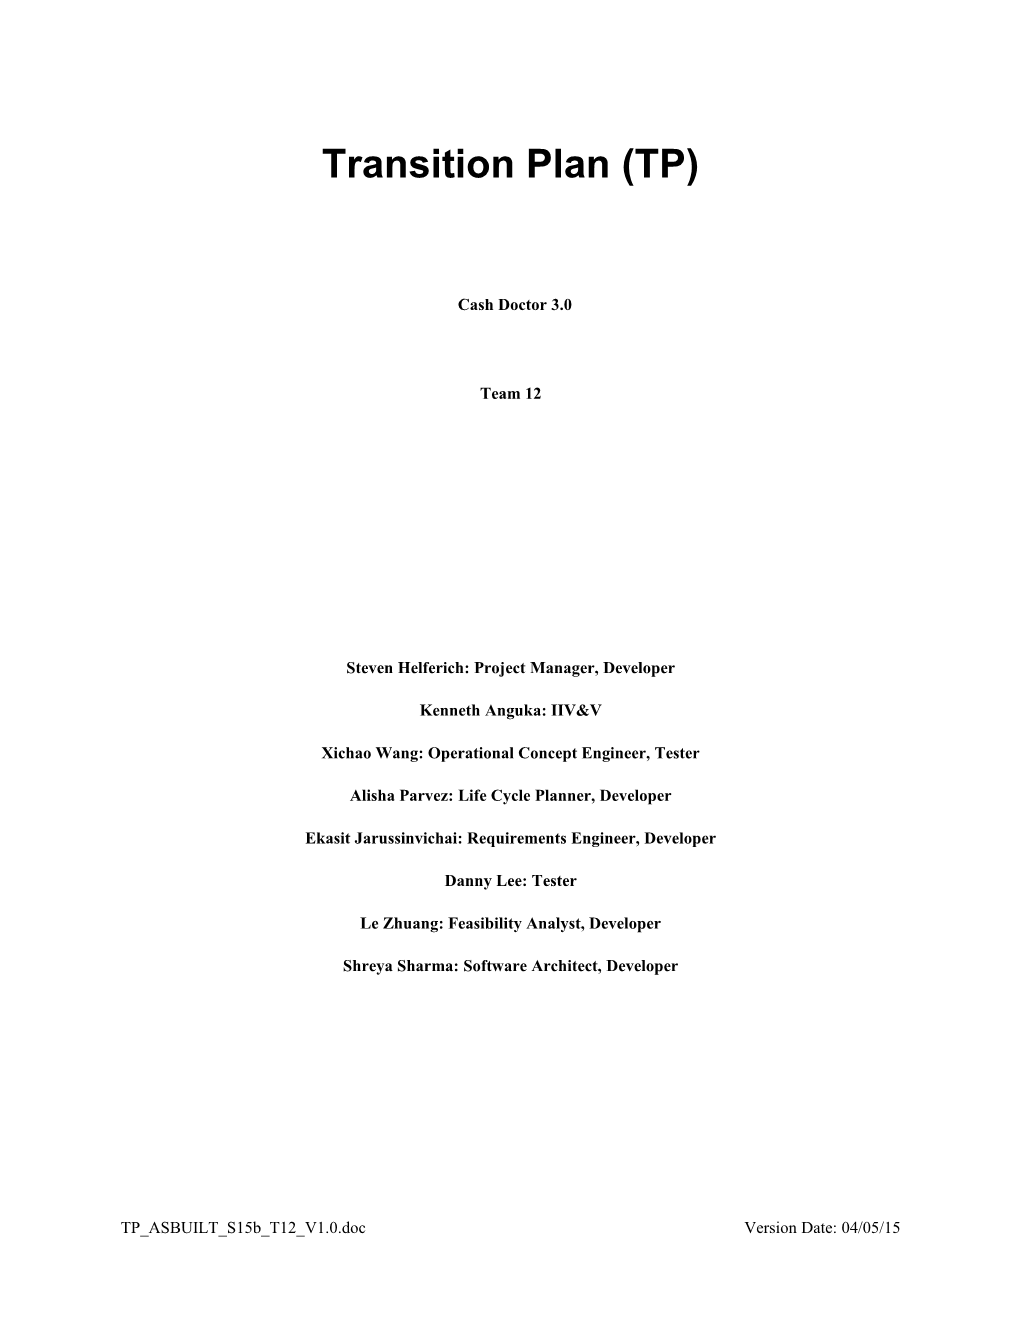 Transition Plan (TP) s2